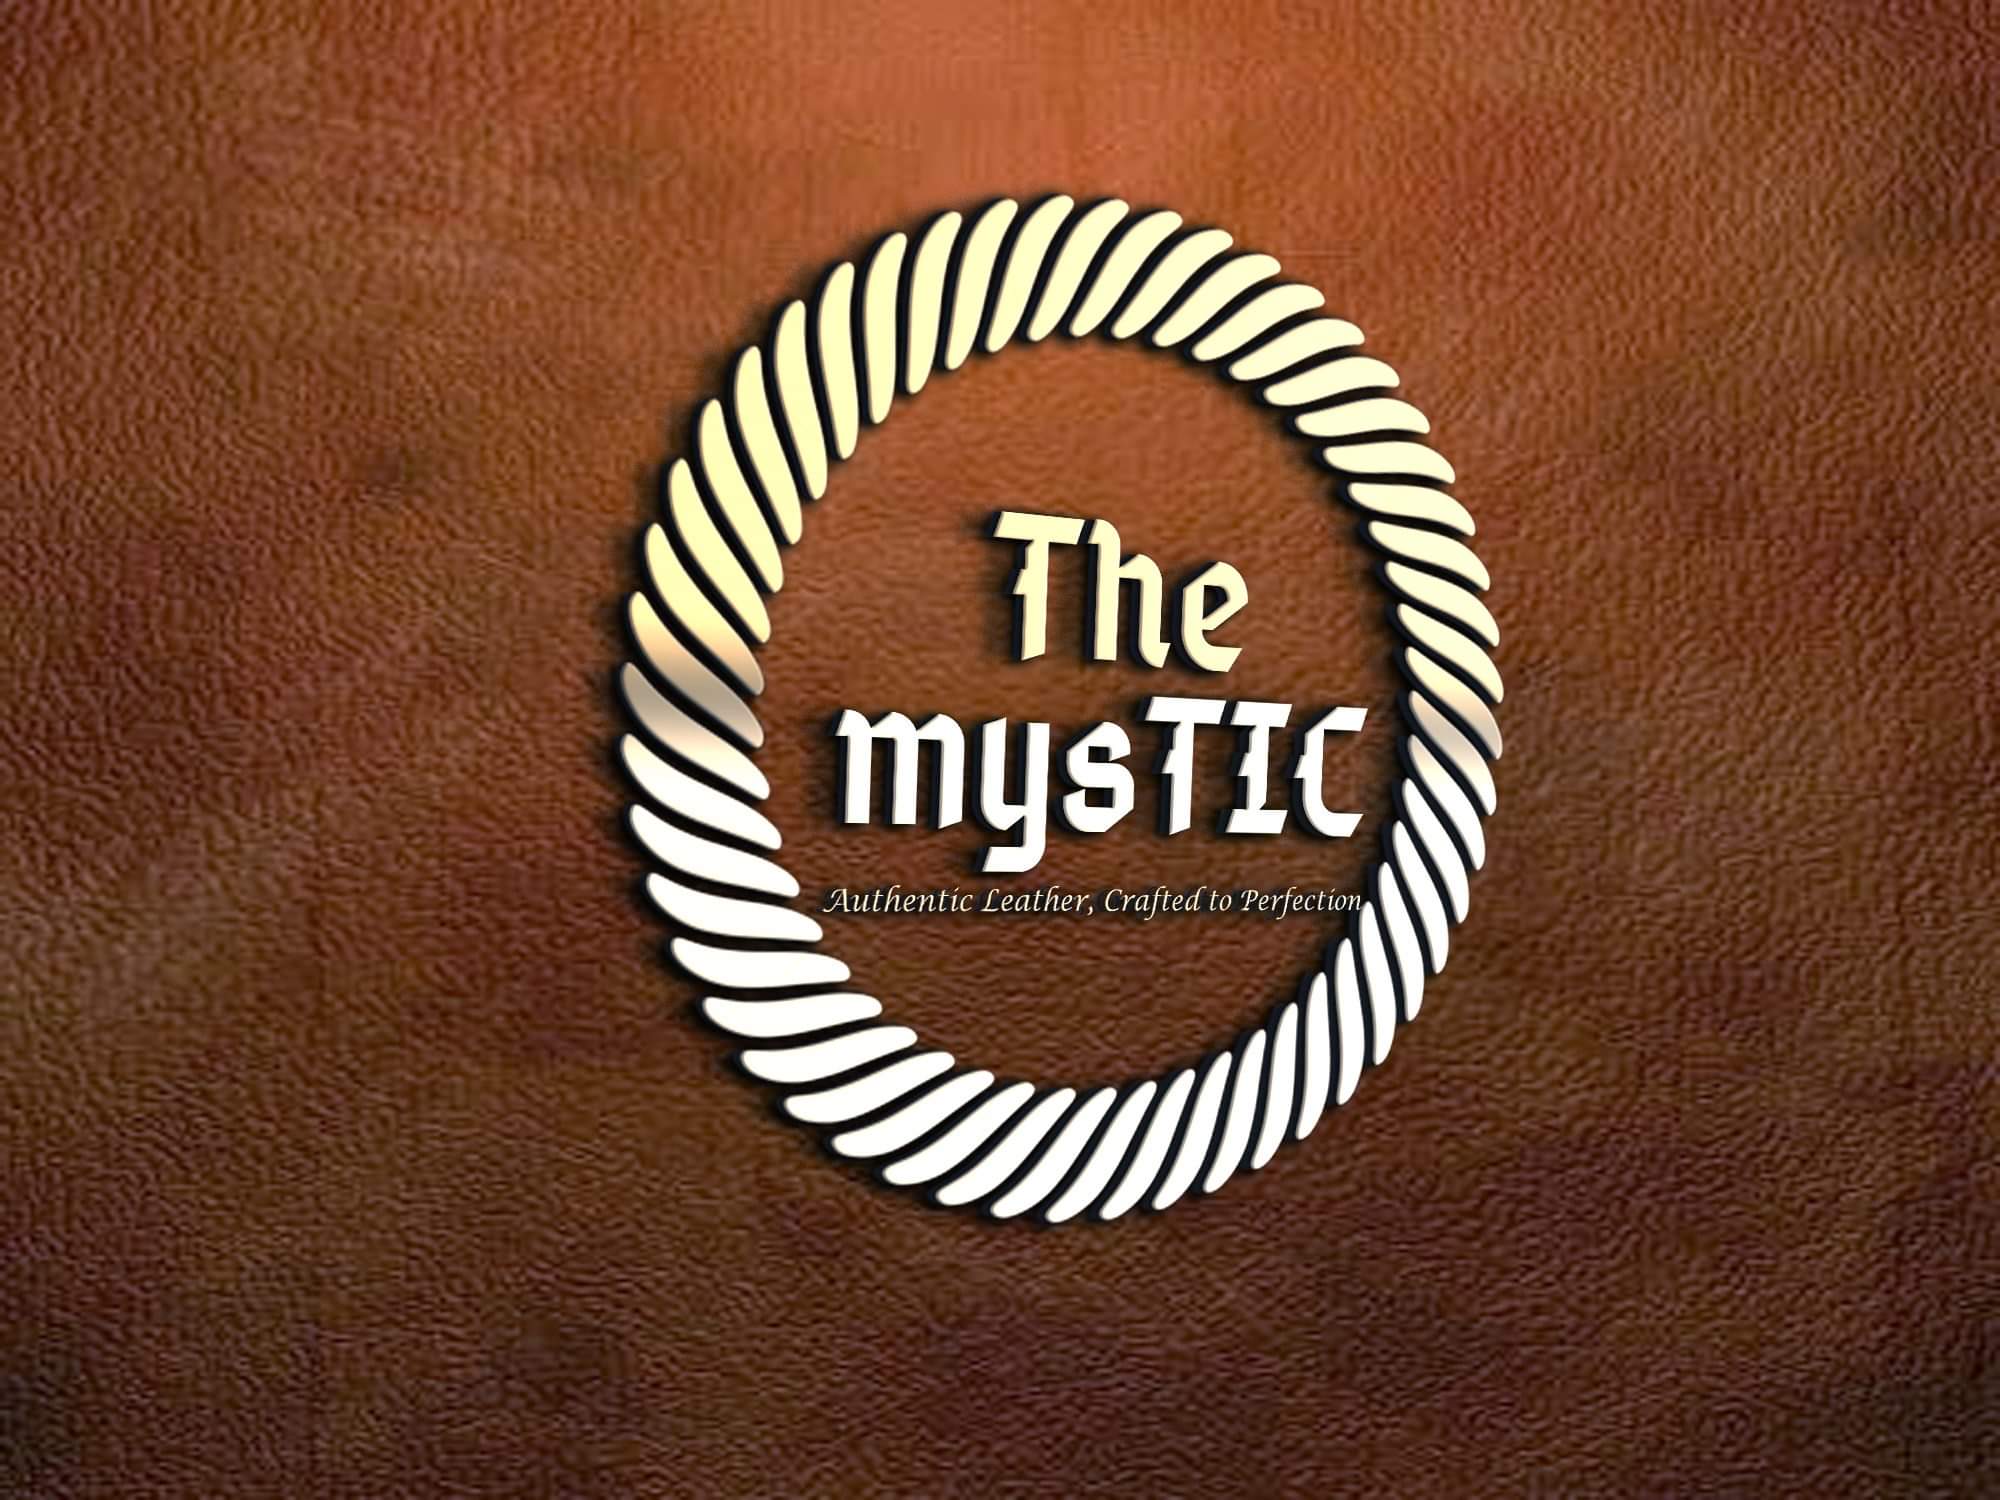 The mystic